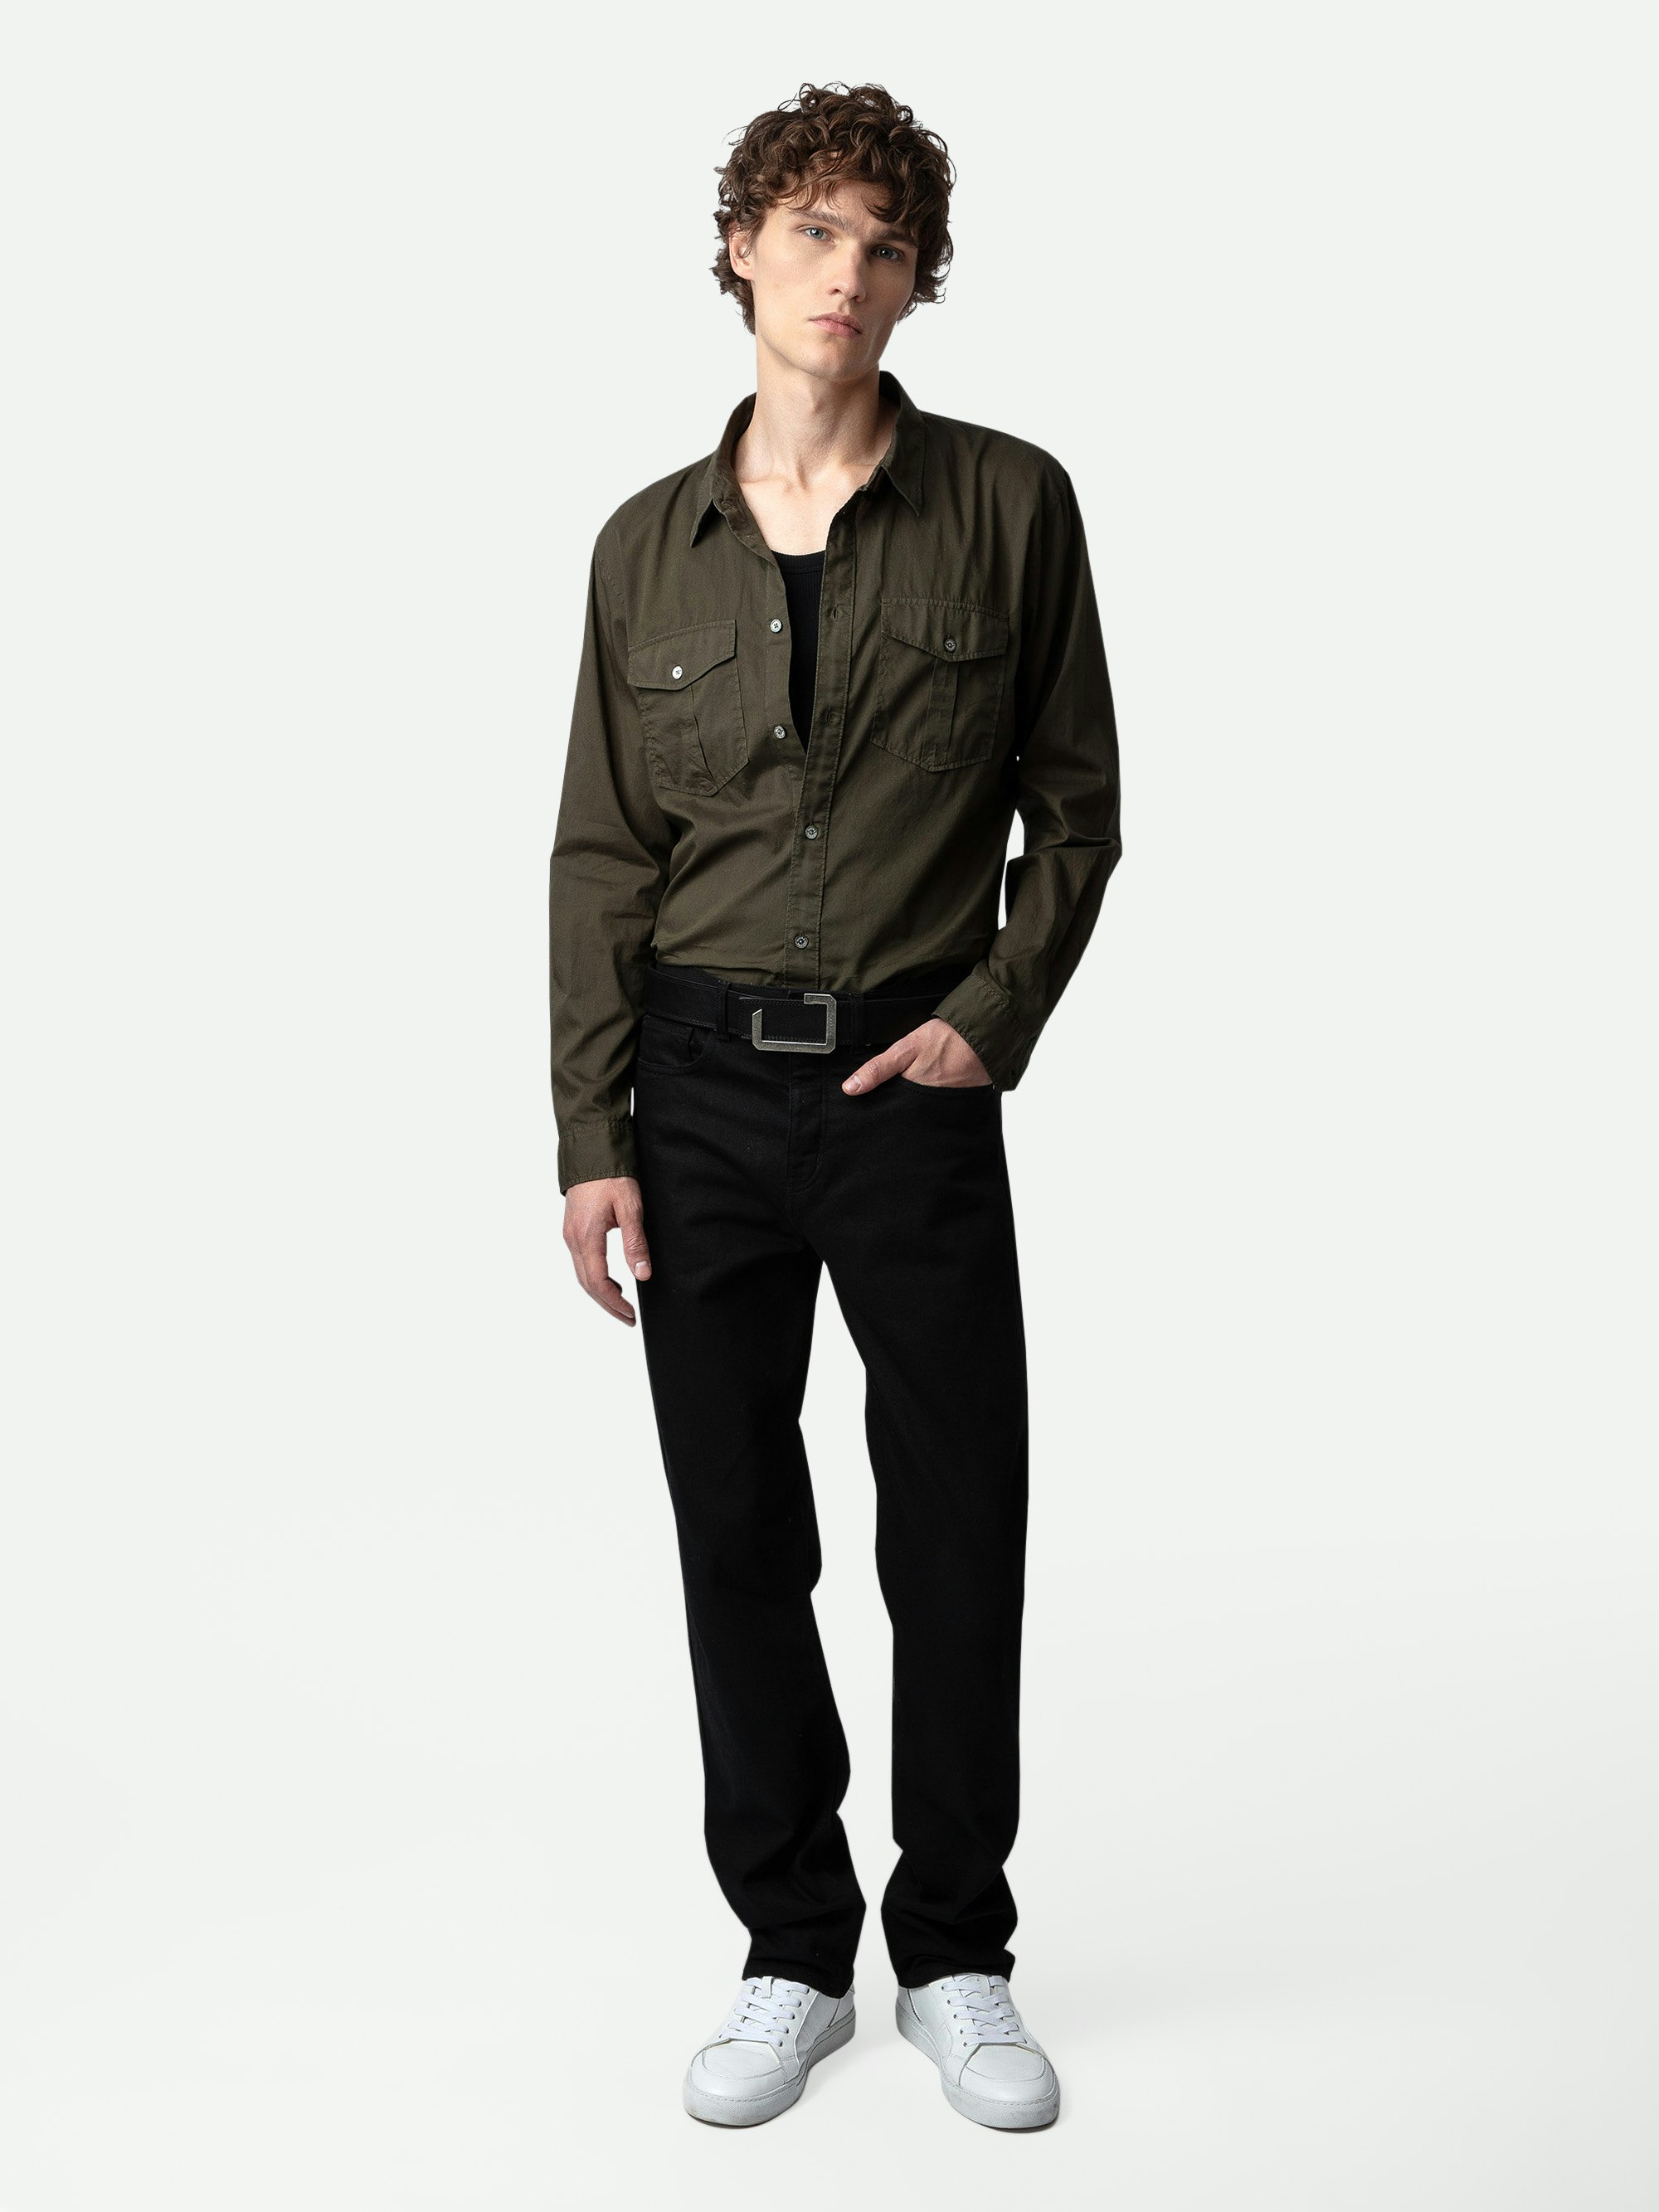 Thibault Shirt - Khaki cotton voile shirt with flap pockets.